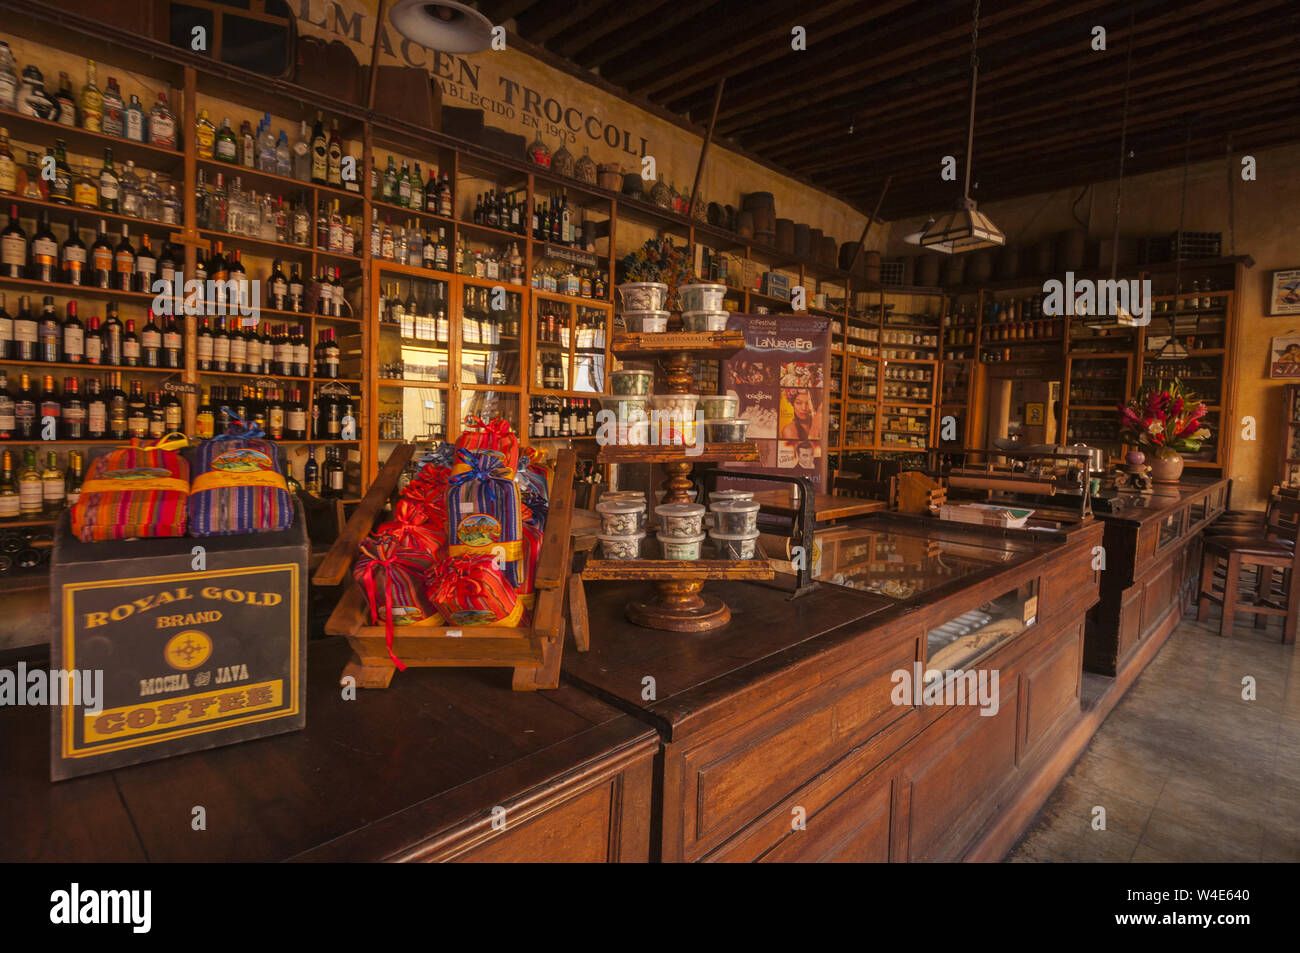 Guatemala, Antigua, Calle 5 a, Wein Shop Interior Stockfoto